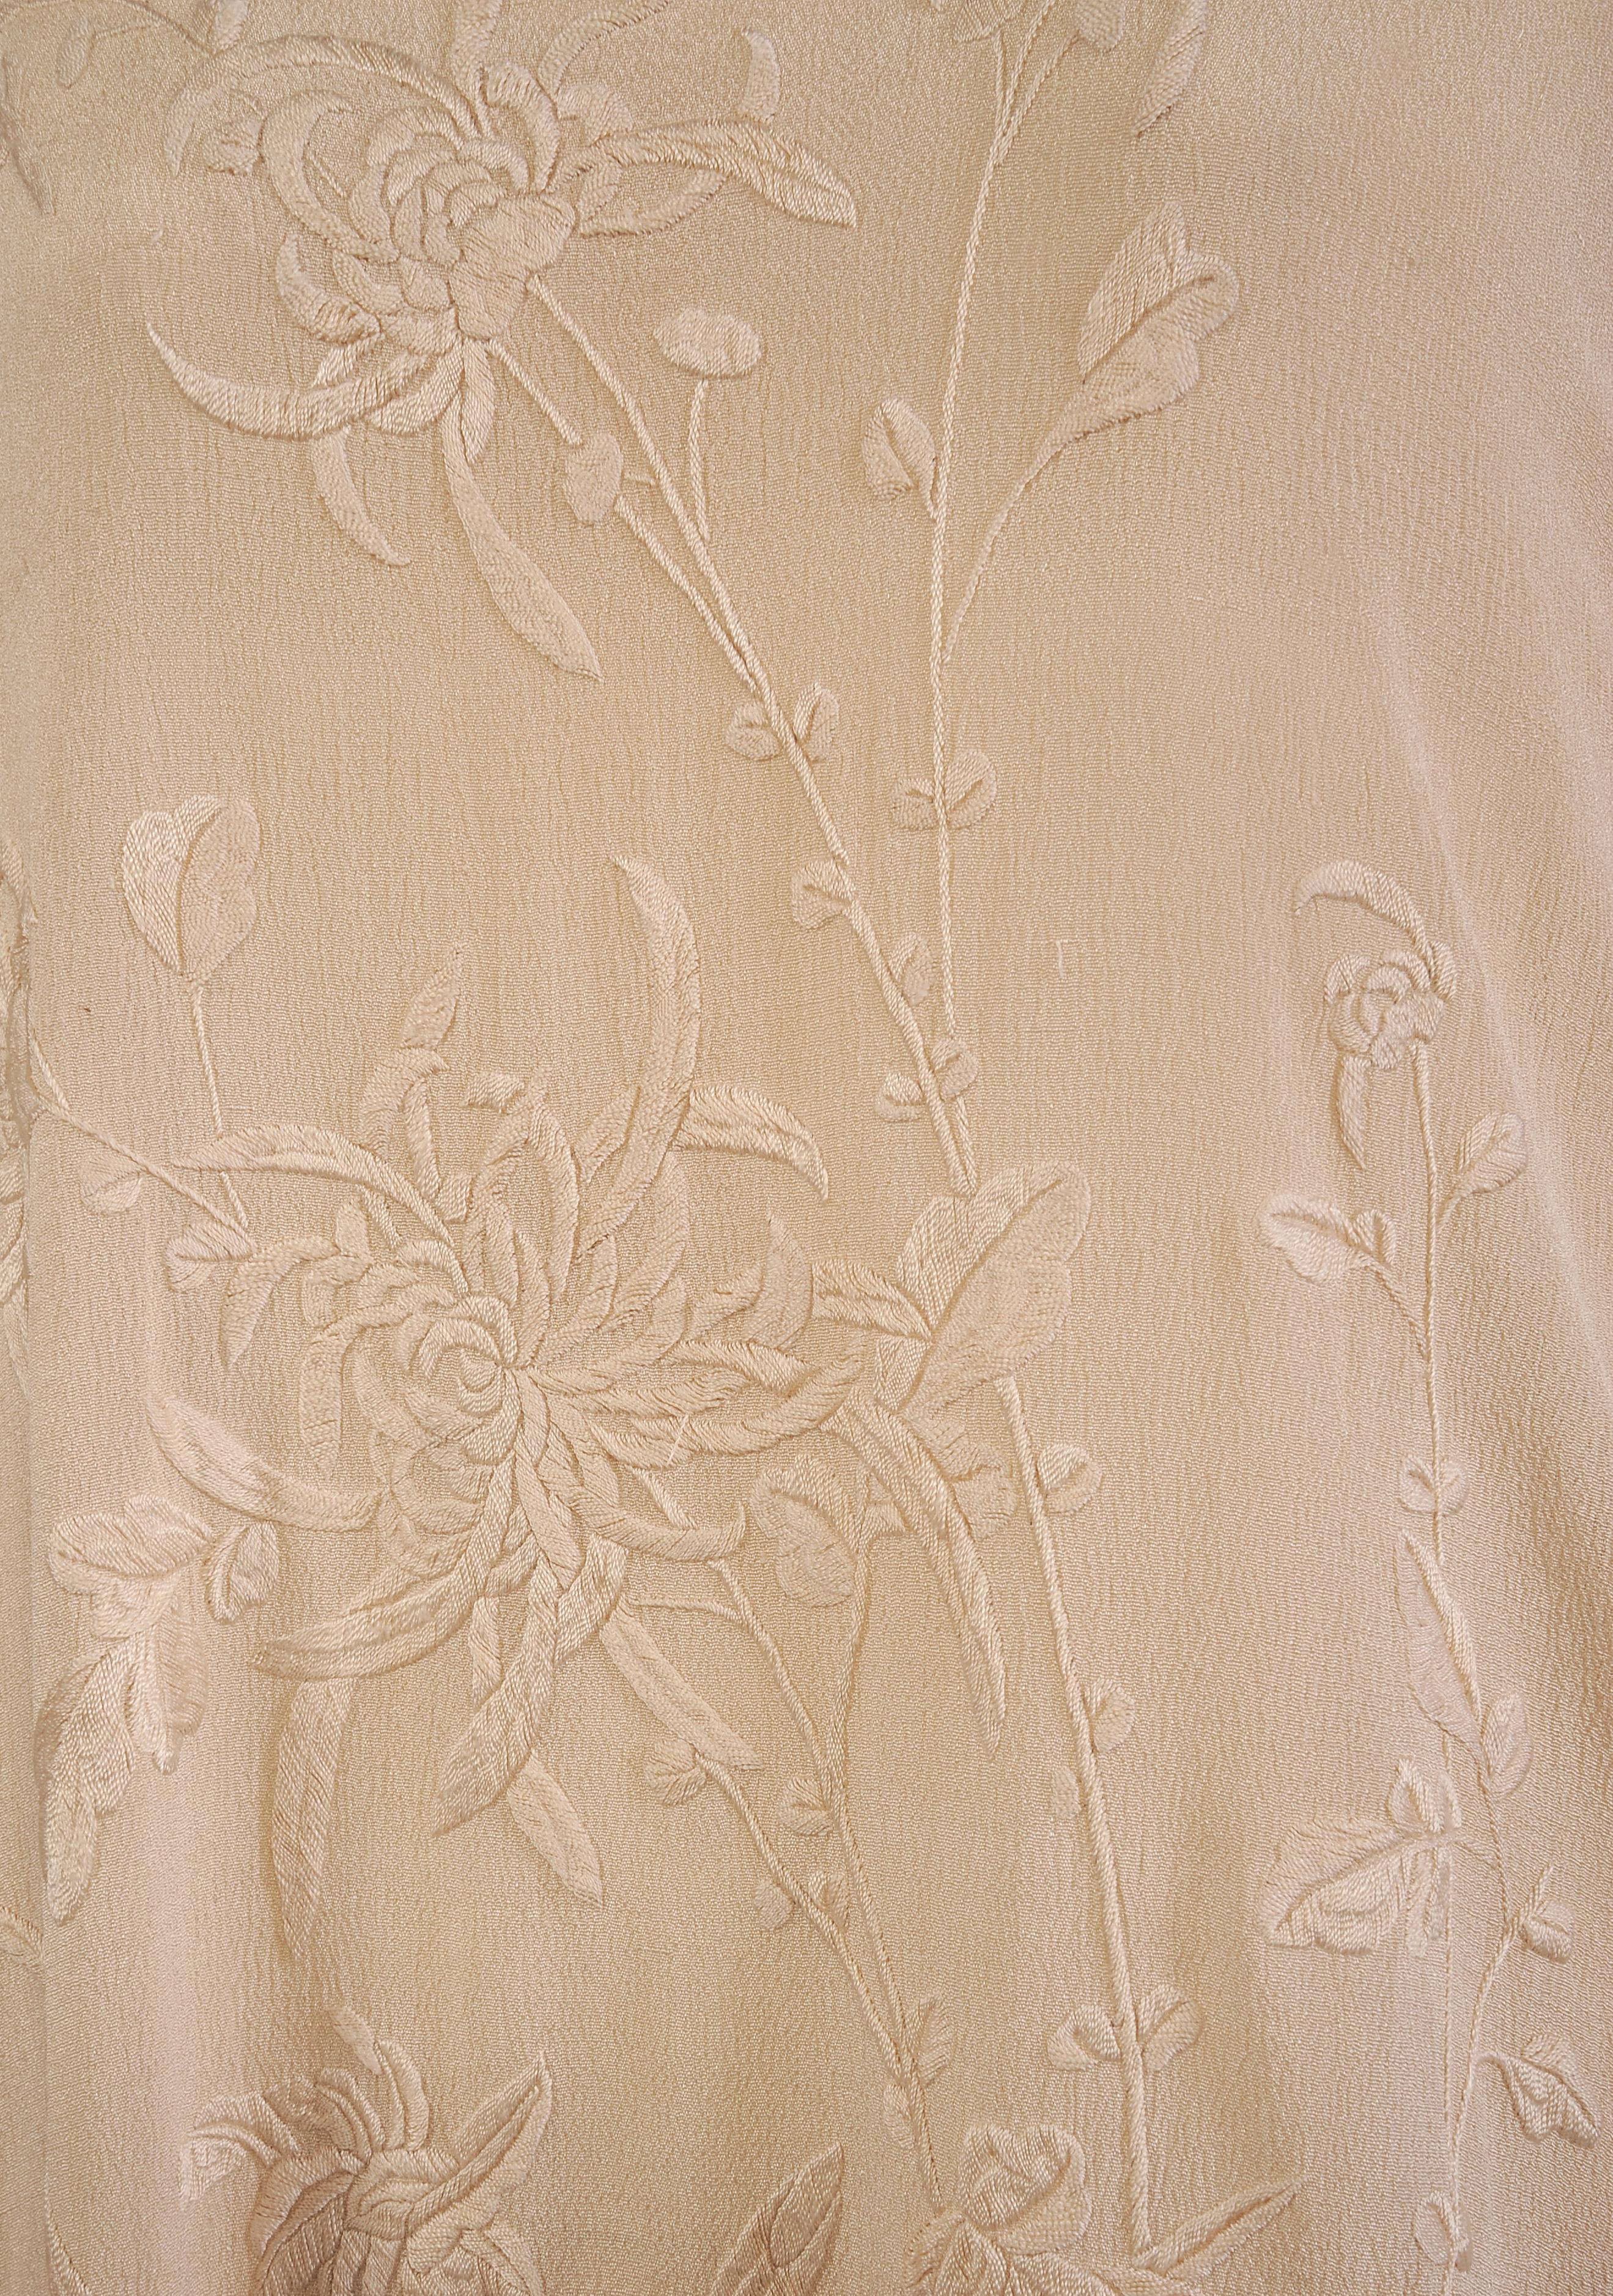 Women's Japanese Ivory Silk Hand Embroidery on an Ivory Silk 1920's Evening Dress